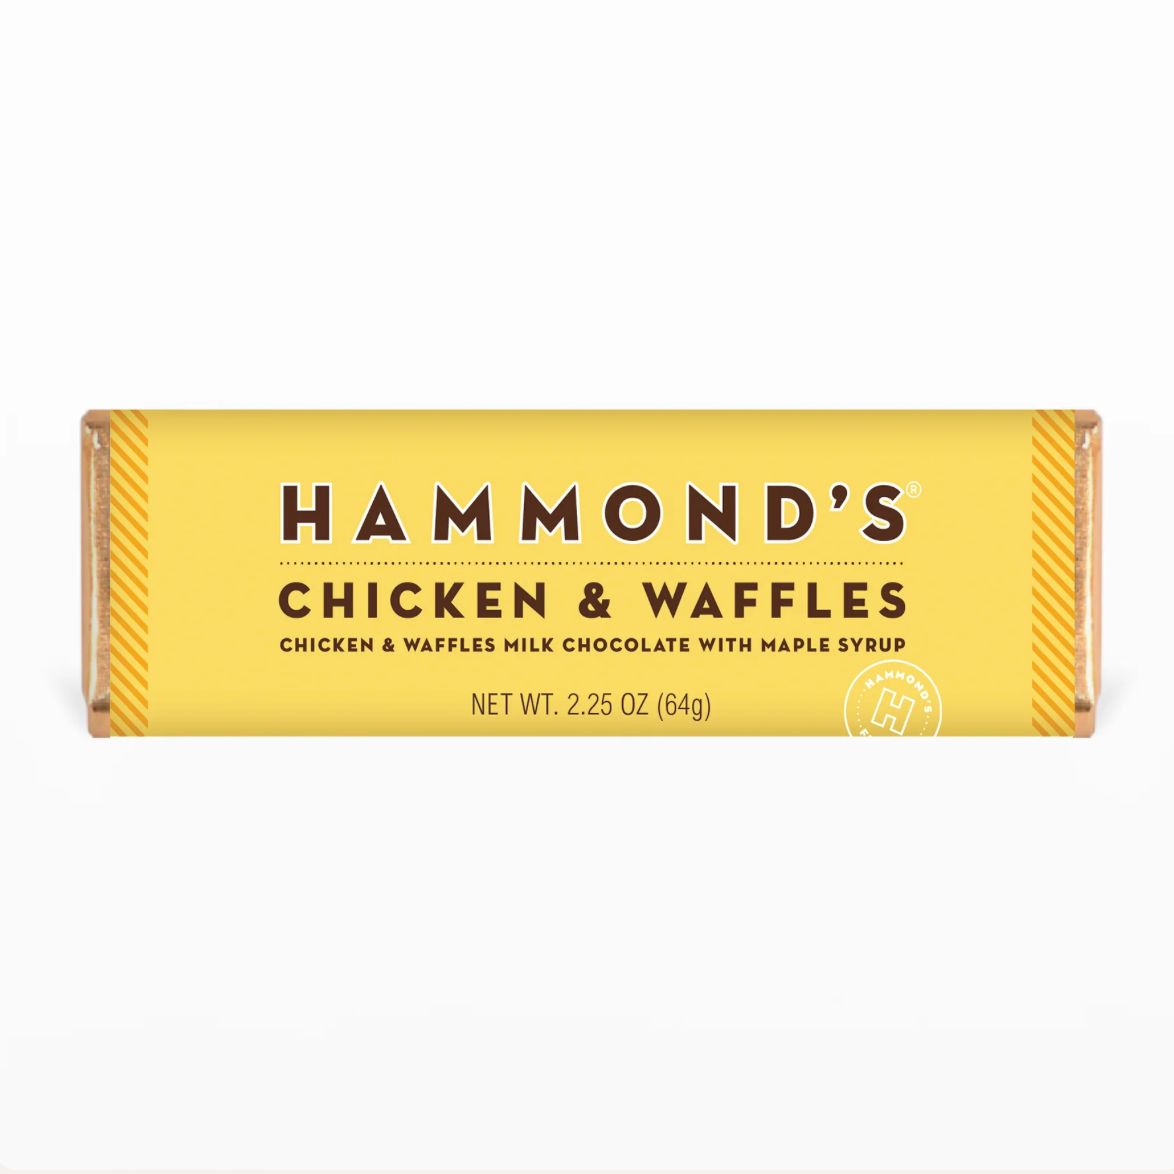 Hammond's Chicken & Waffles